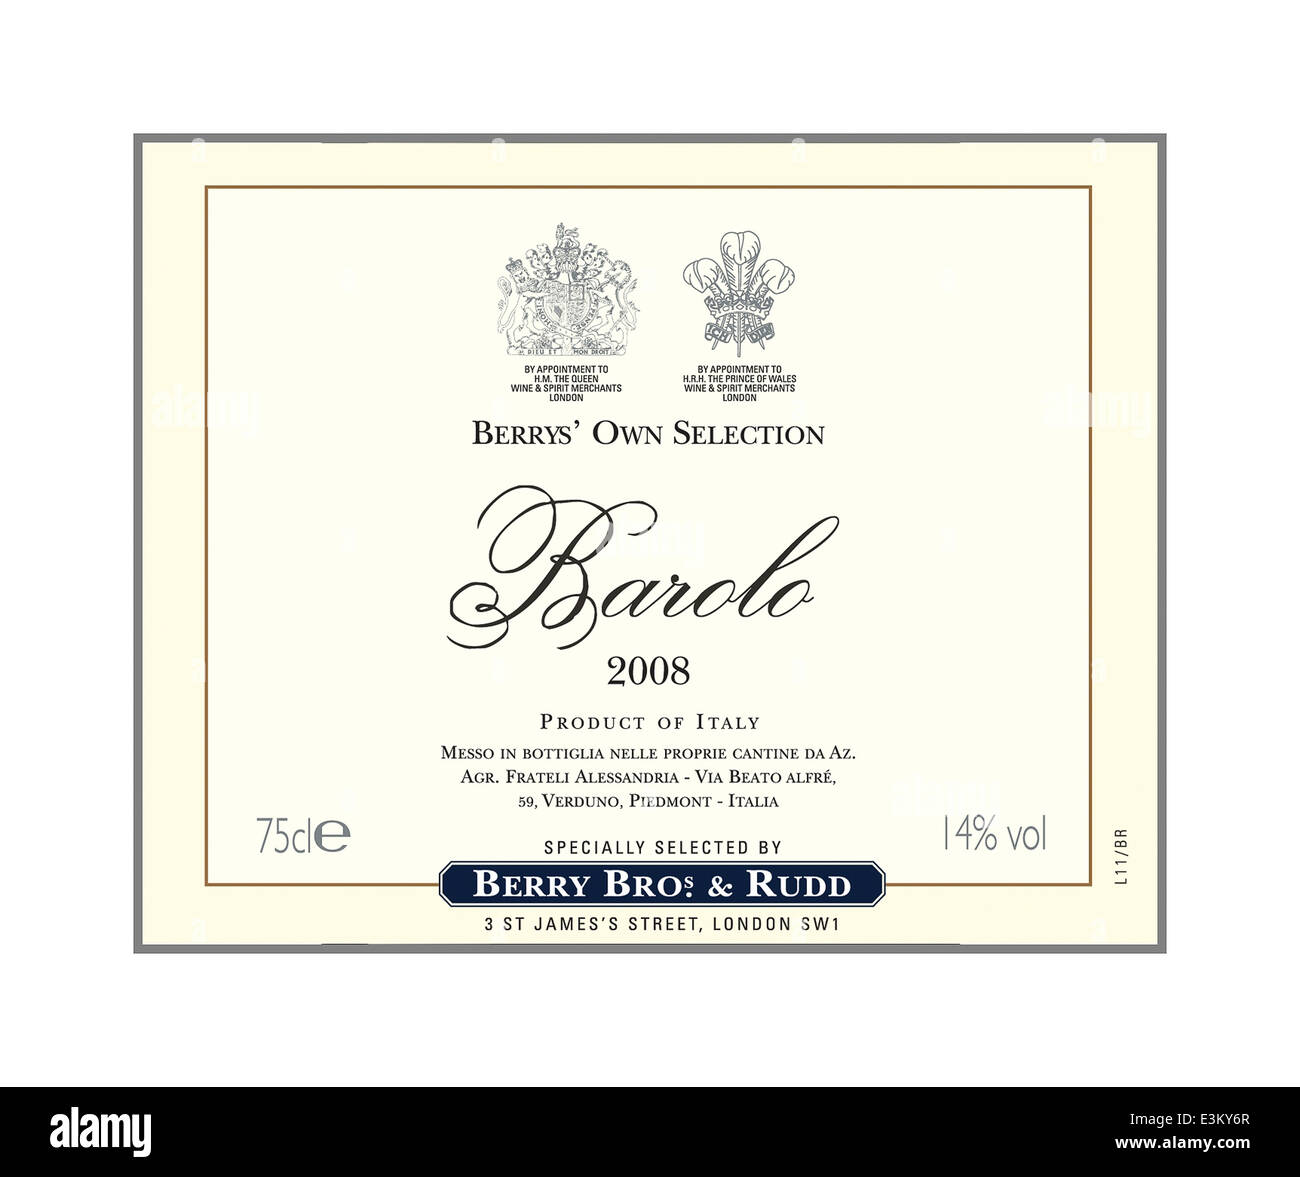 Berrys Bros & Rudd Barolo fina etiqueta de botella de vino tinto italiano 2008 Foto de stock